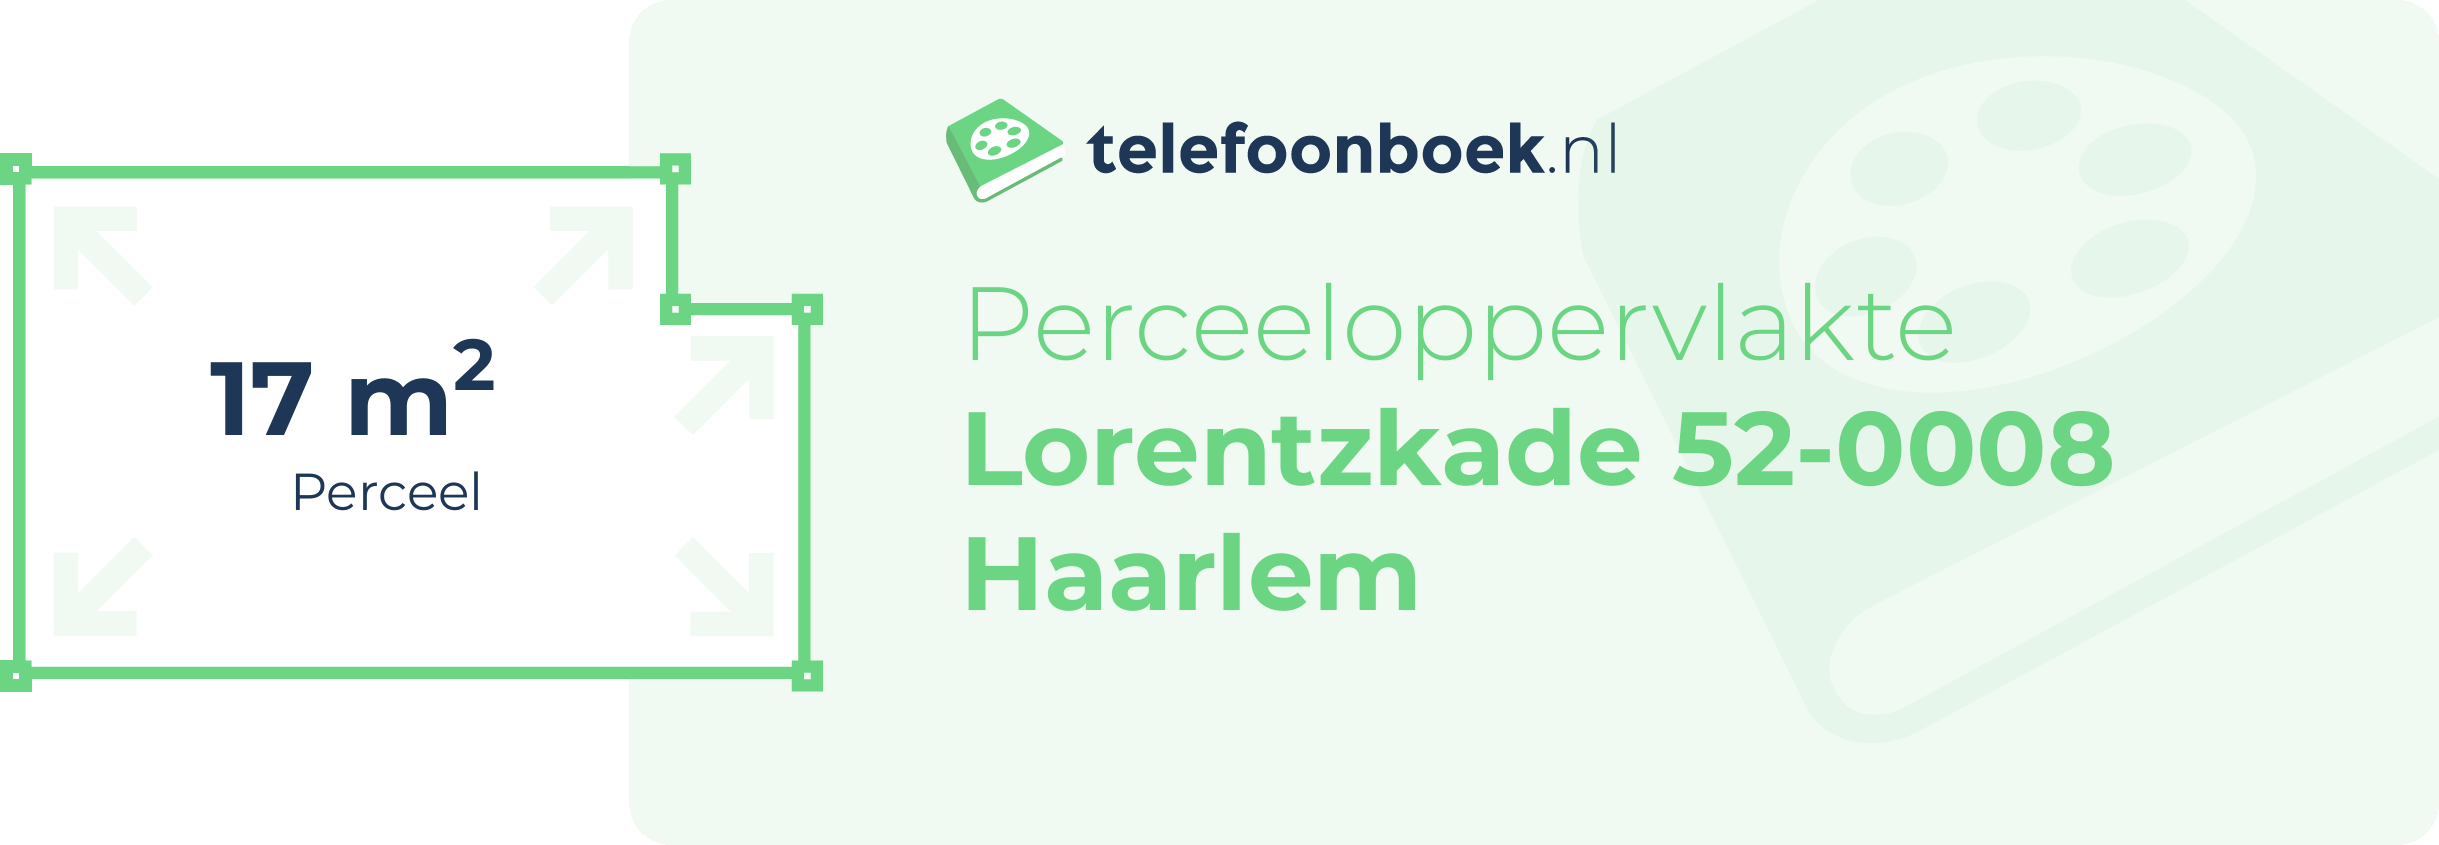 Perceeloppervlakte Lorentzkade 52-0008 Haarlem